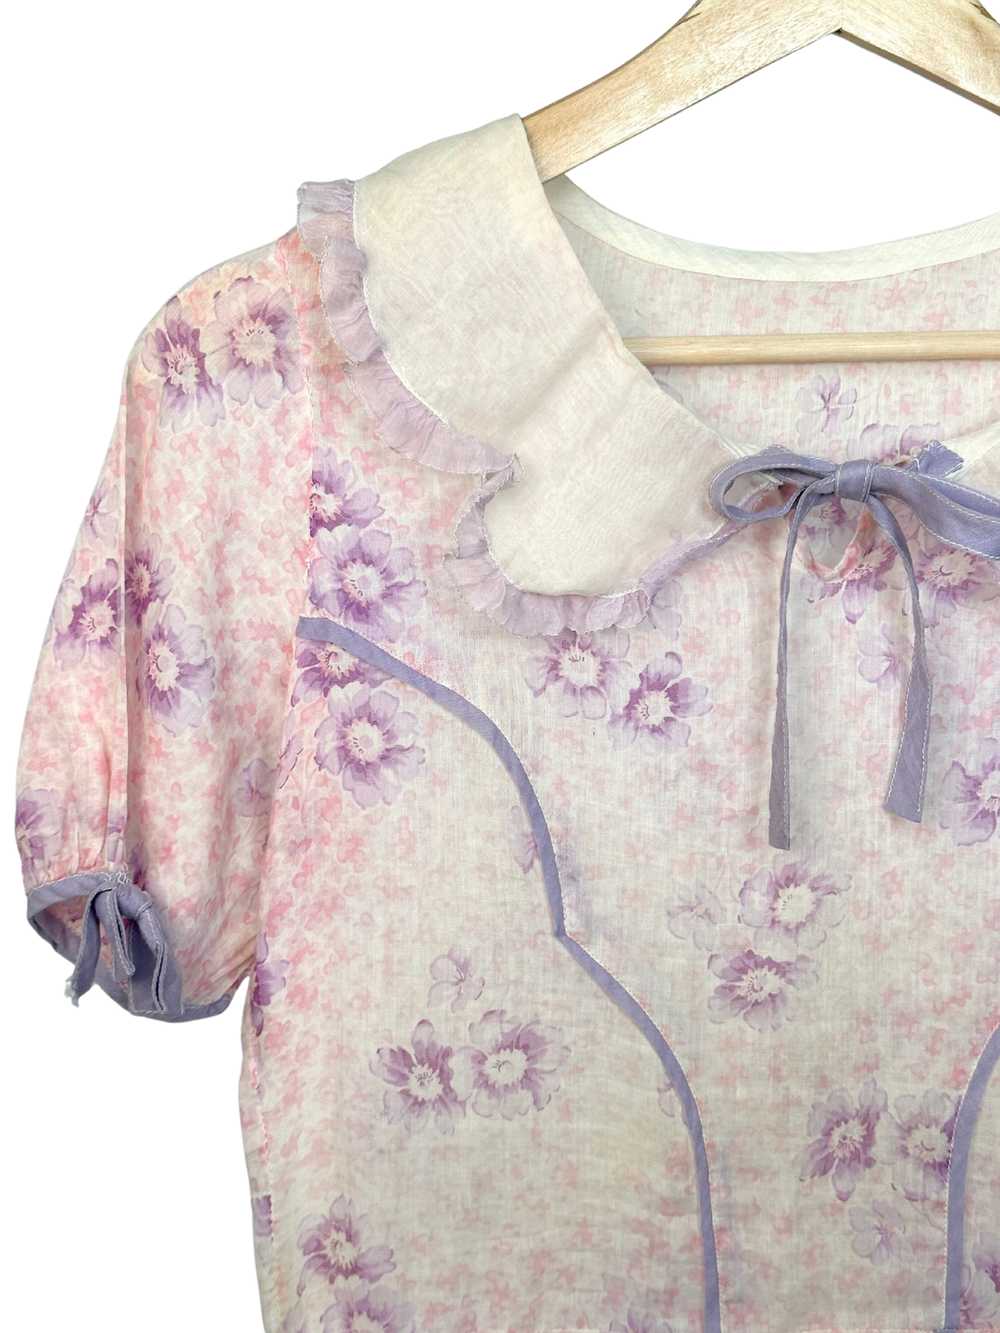 Vintage 1930s Pink Floral Cotton Dress - S - image 2